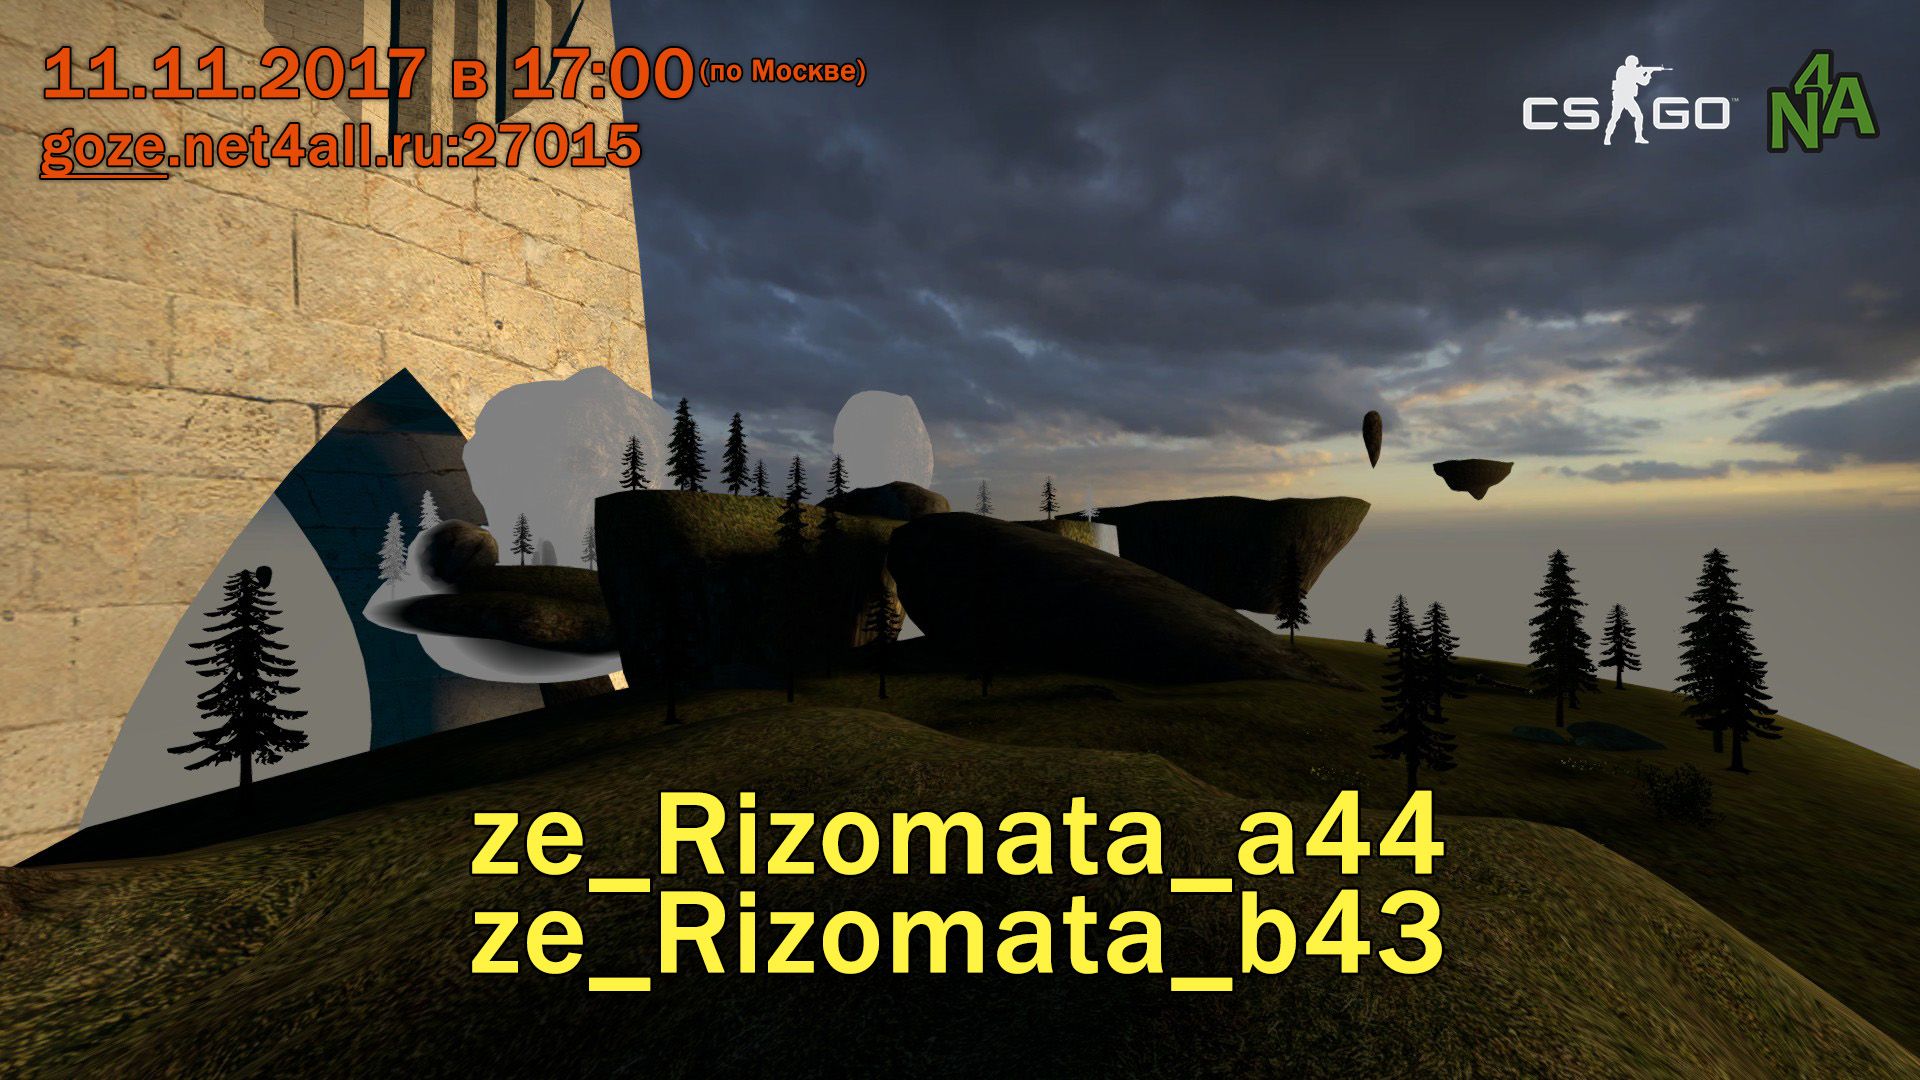 event_csgo_ze_rizomata_a44_and_b43.jpg